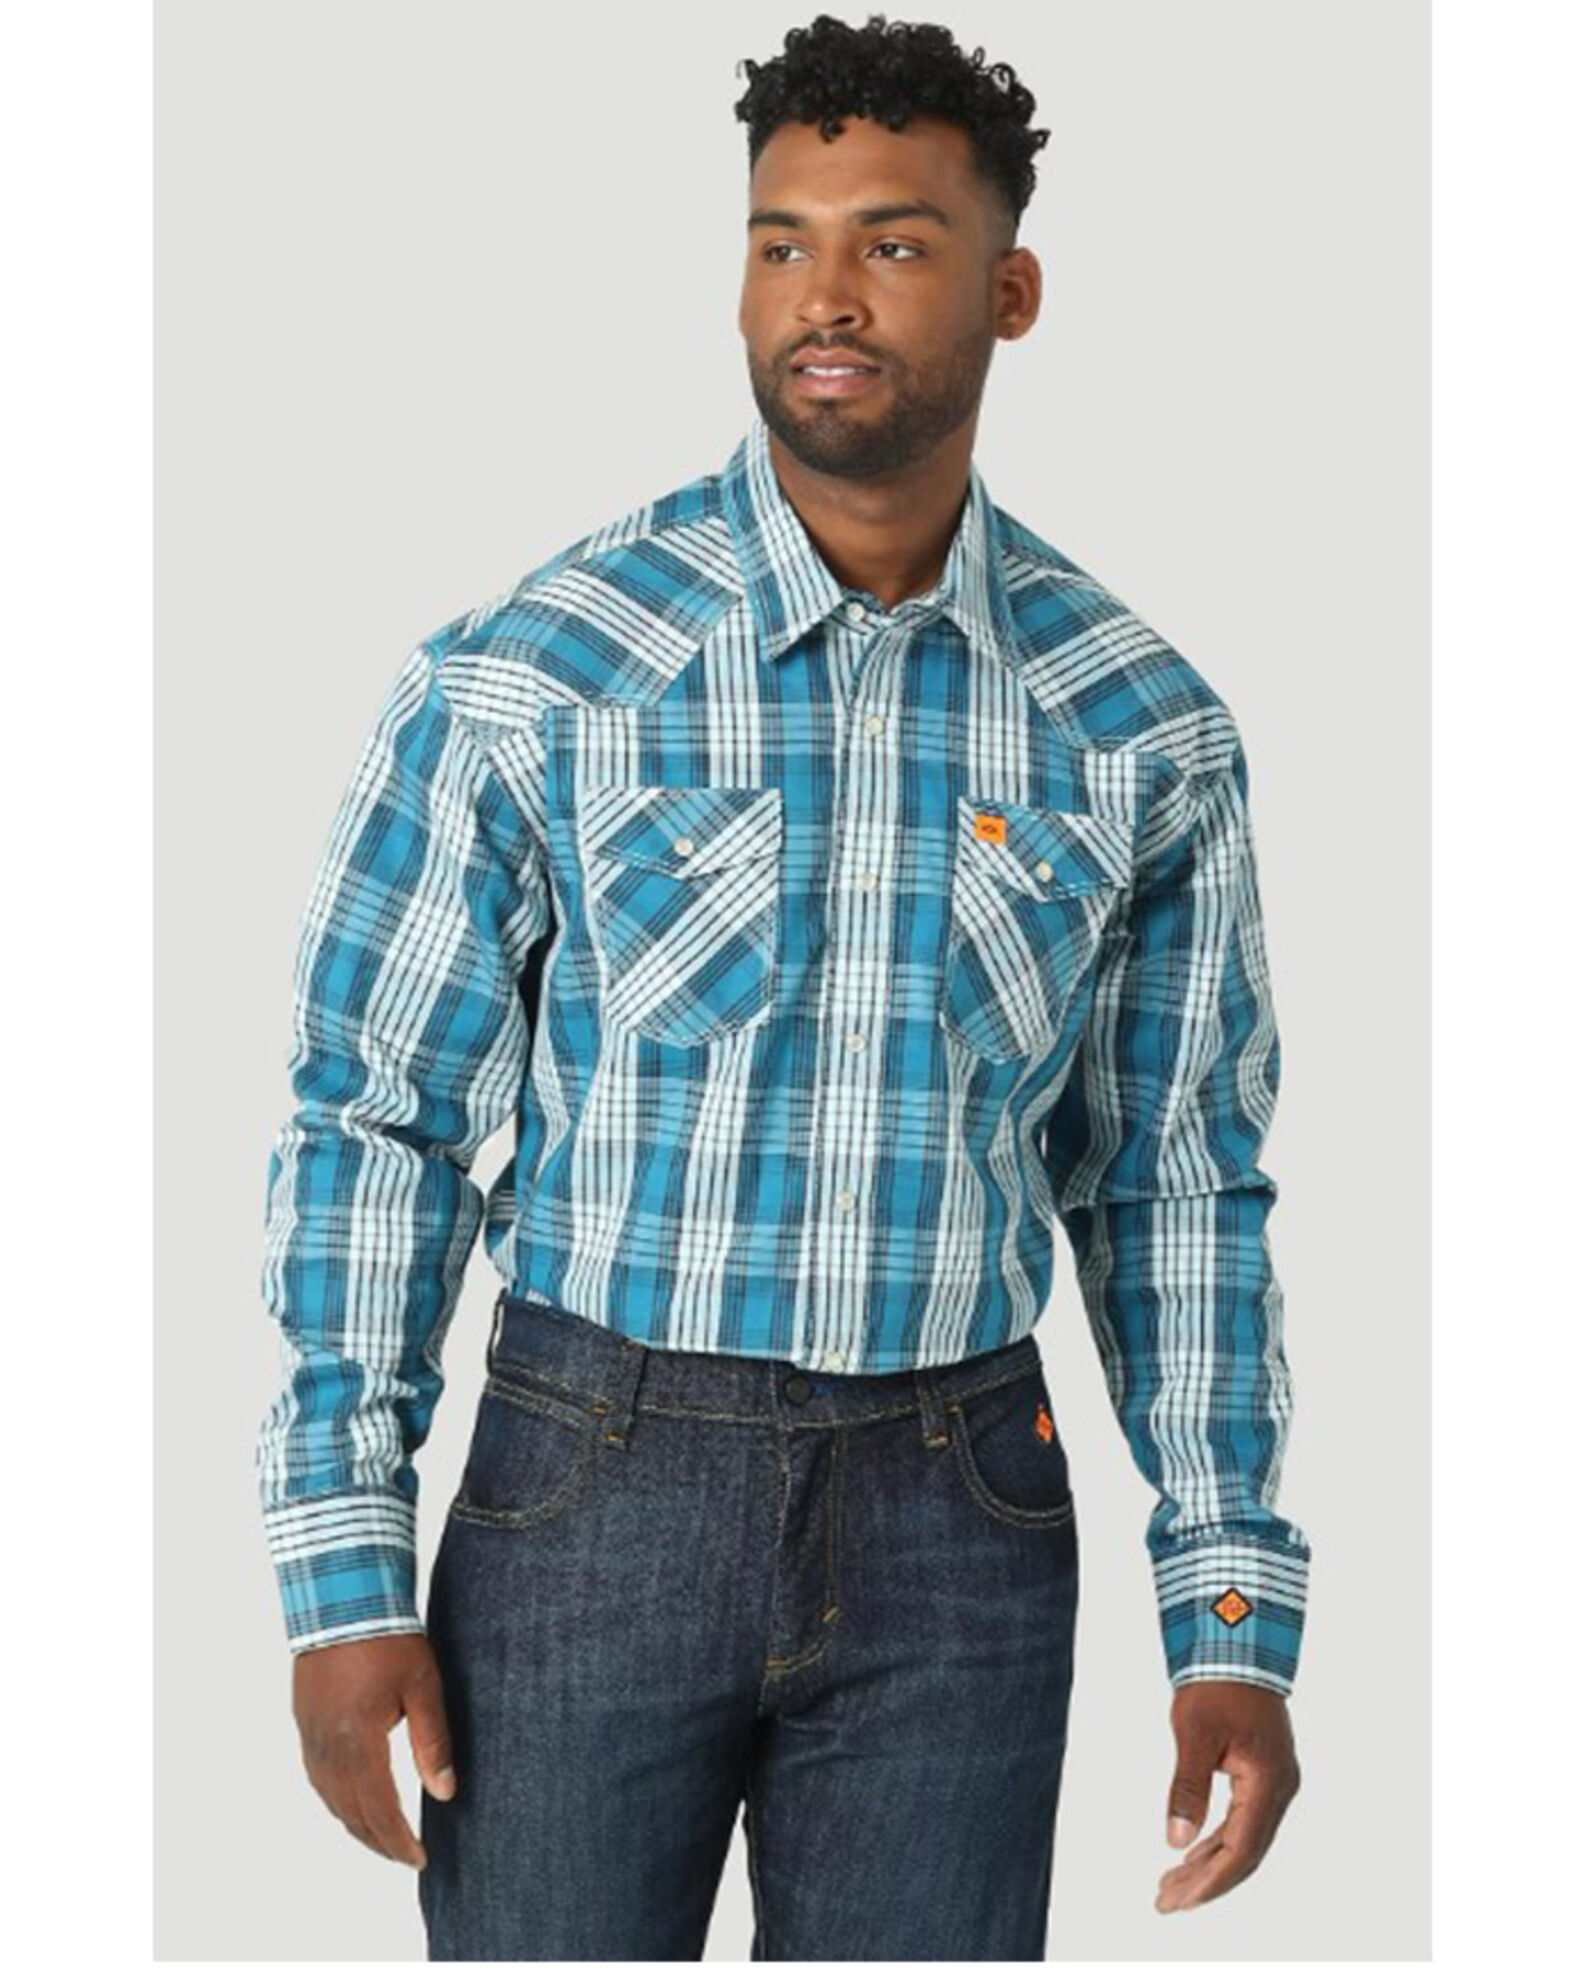 Product Name: Wrangler 20X Men's FR Plaid Print Long Sleeve Snap Western  Work Shirt